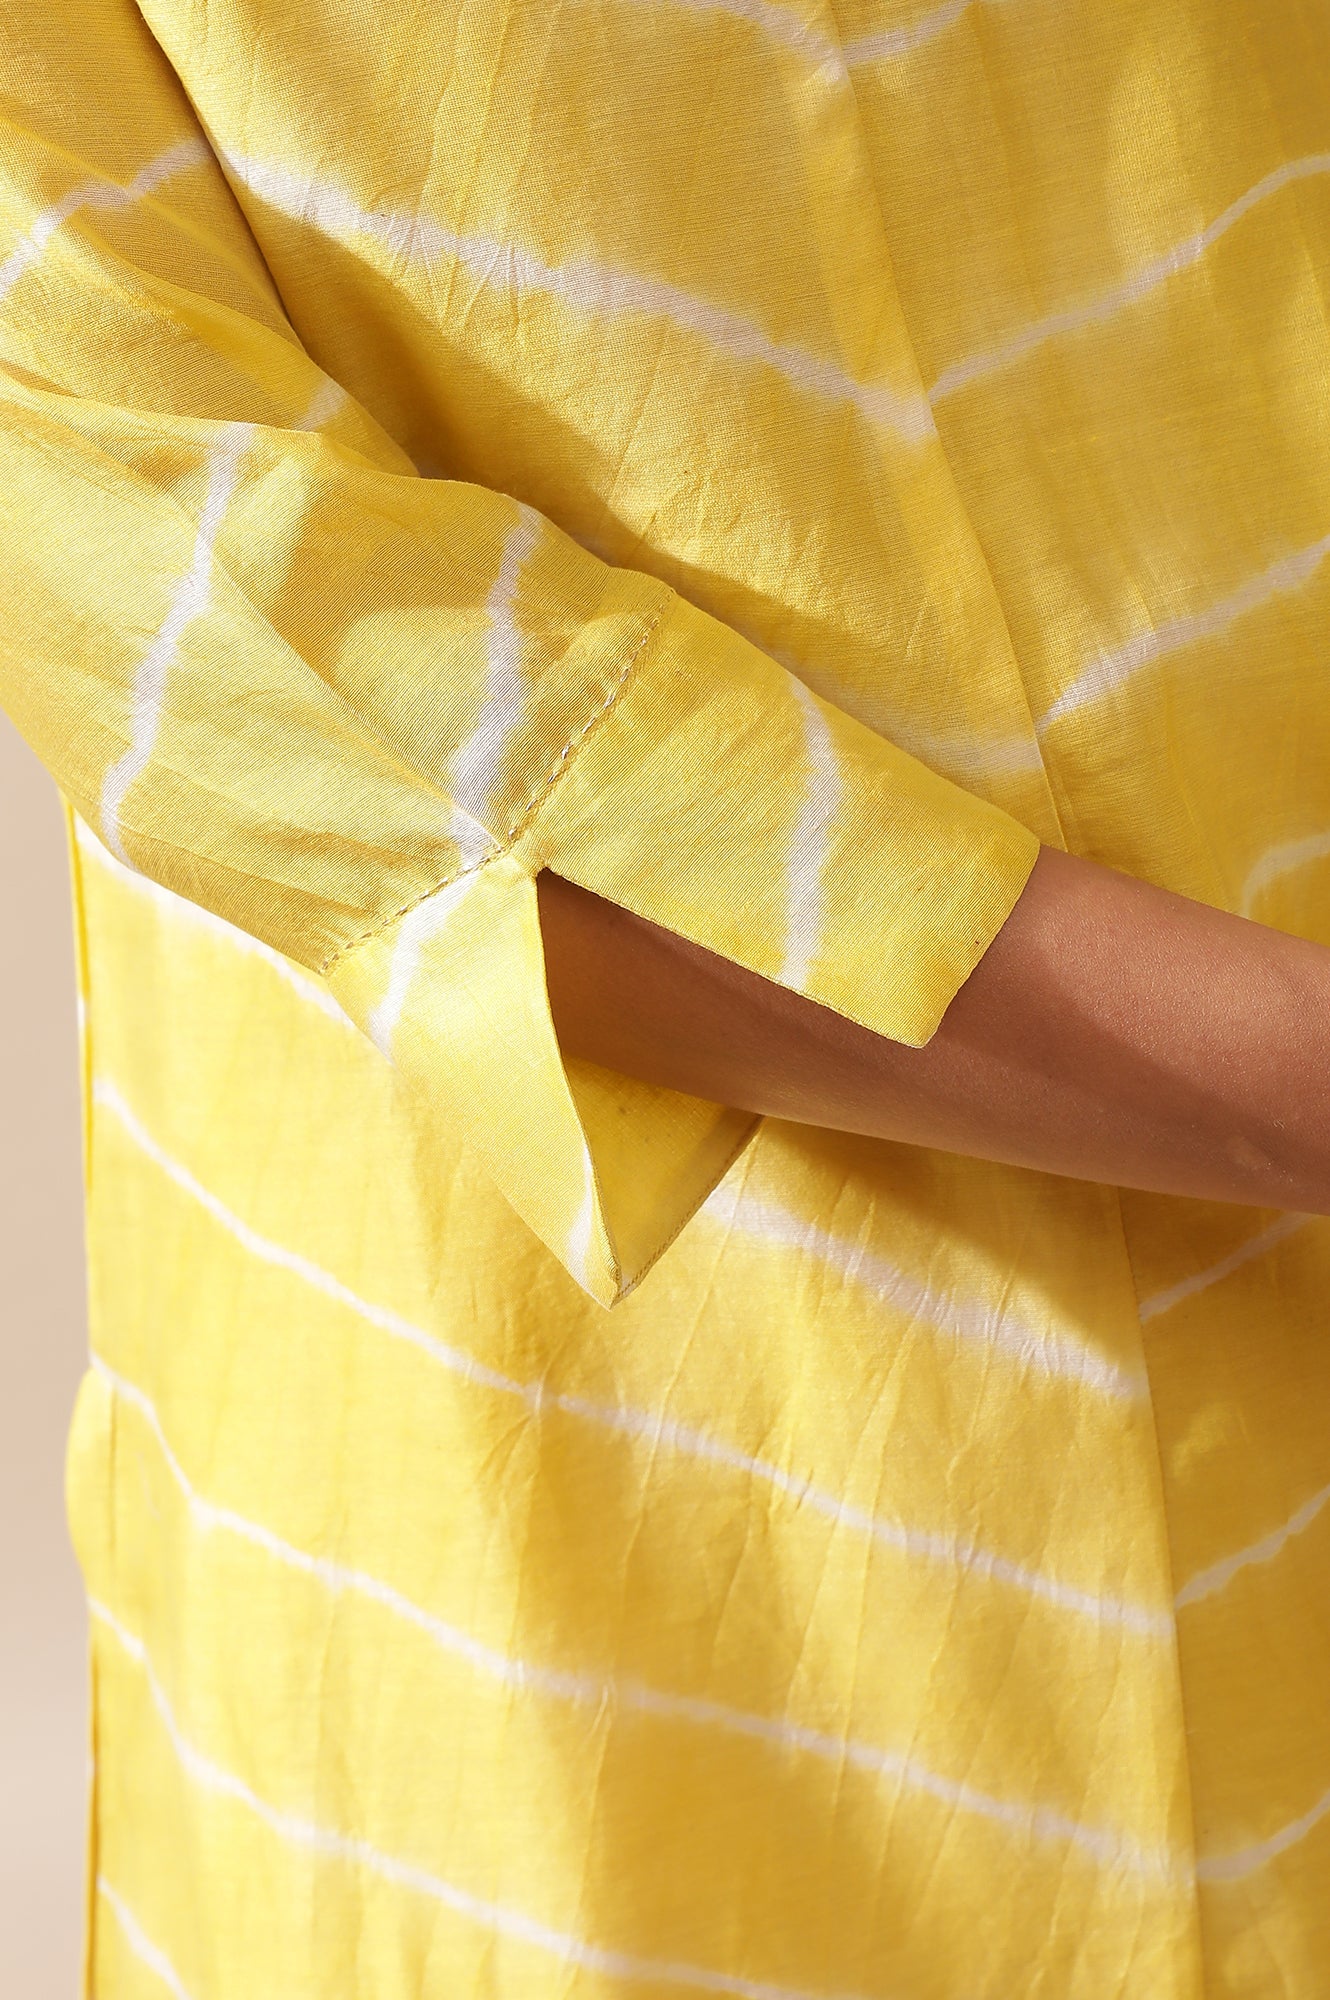 Yellow Cotton Silk Lehariya Kurta With Mukaish Embroidery